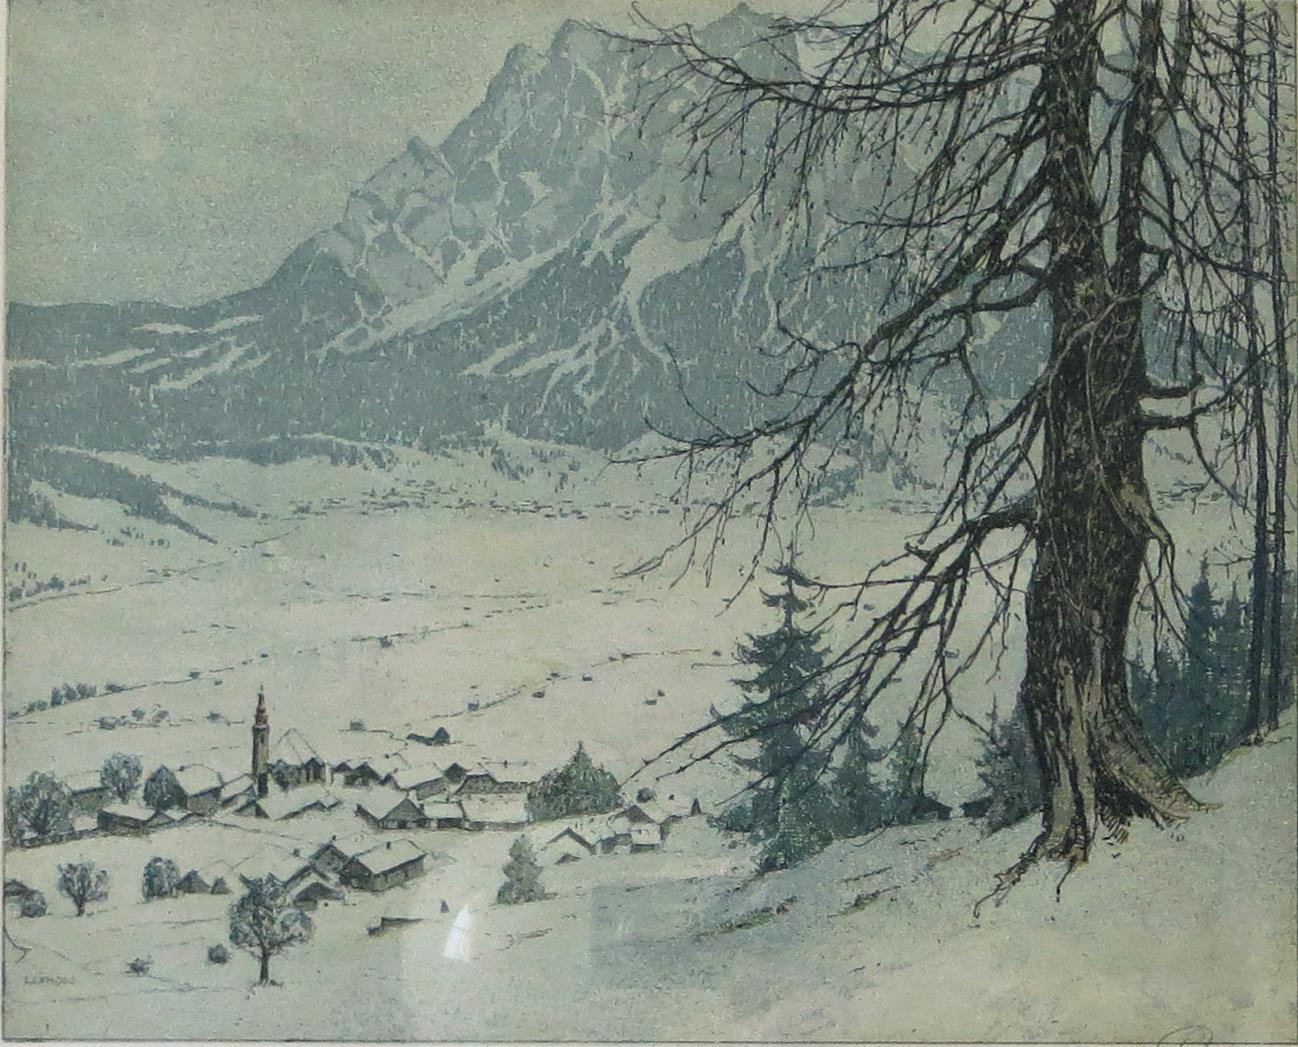 Lermoos, Austria - Print by Josef Eidenberger